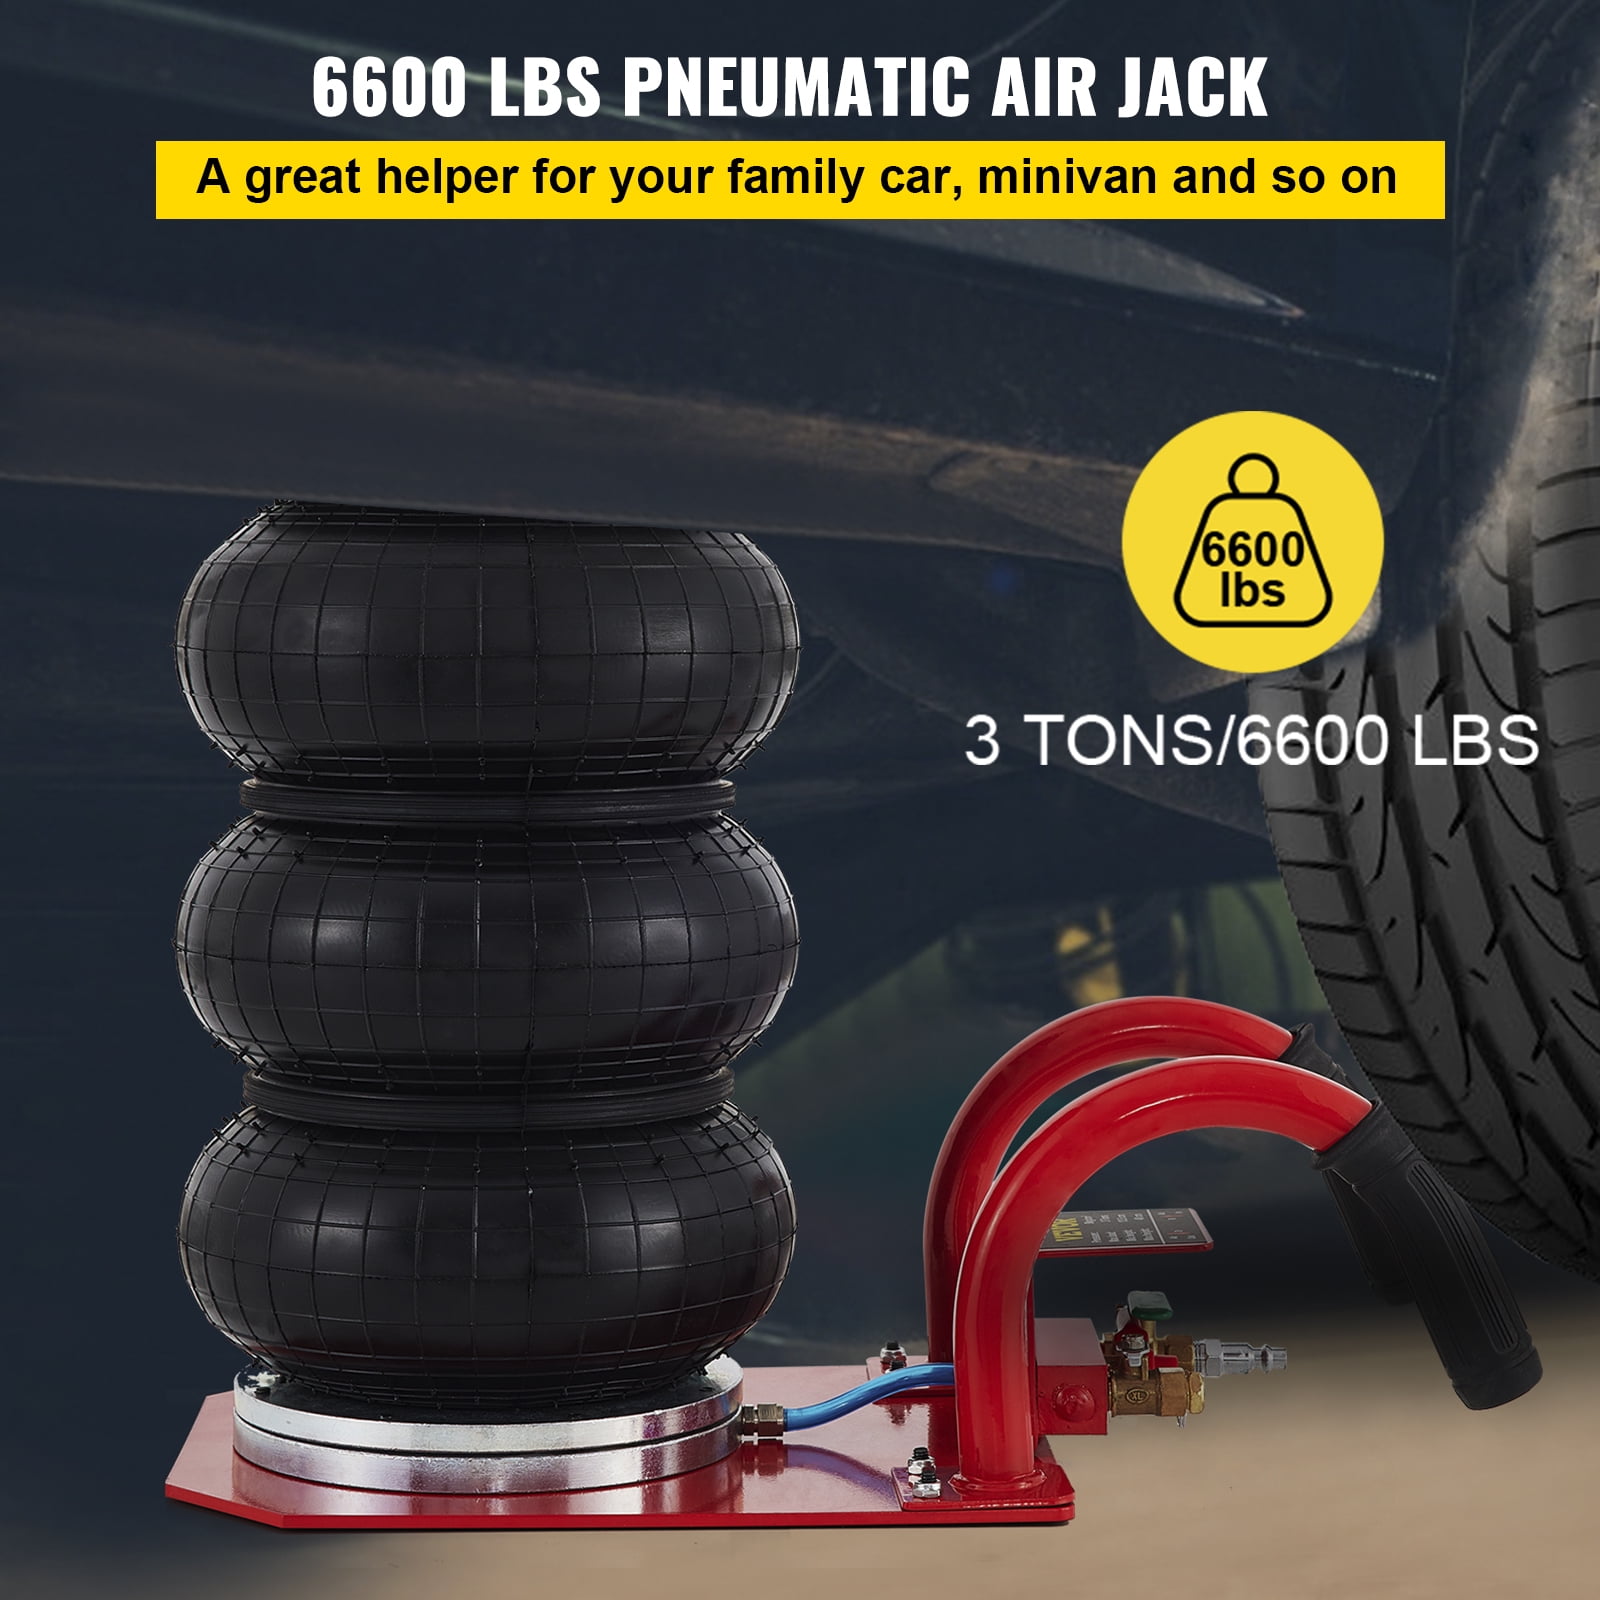 Anbull Portable 3 Ton Pneumatic Jack Triple Bag Air Jack 6600lbs,Quick Lift Heavy Duty Jack for Garage Car Lifting Repair,Up to 16 Inch Black 